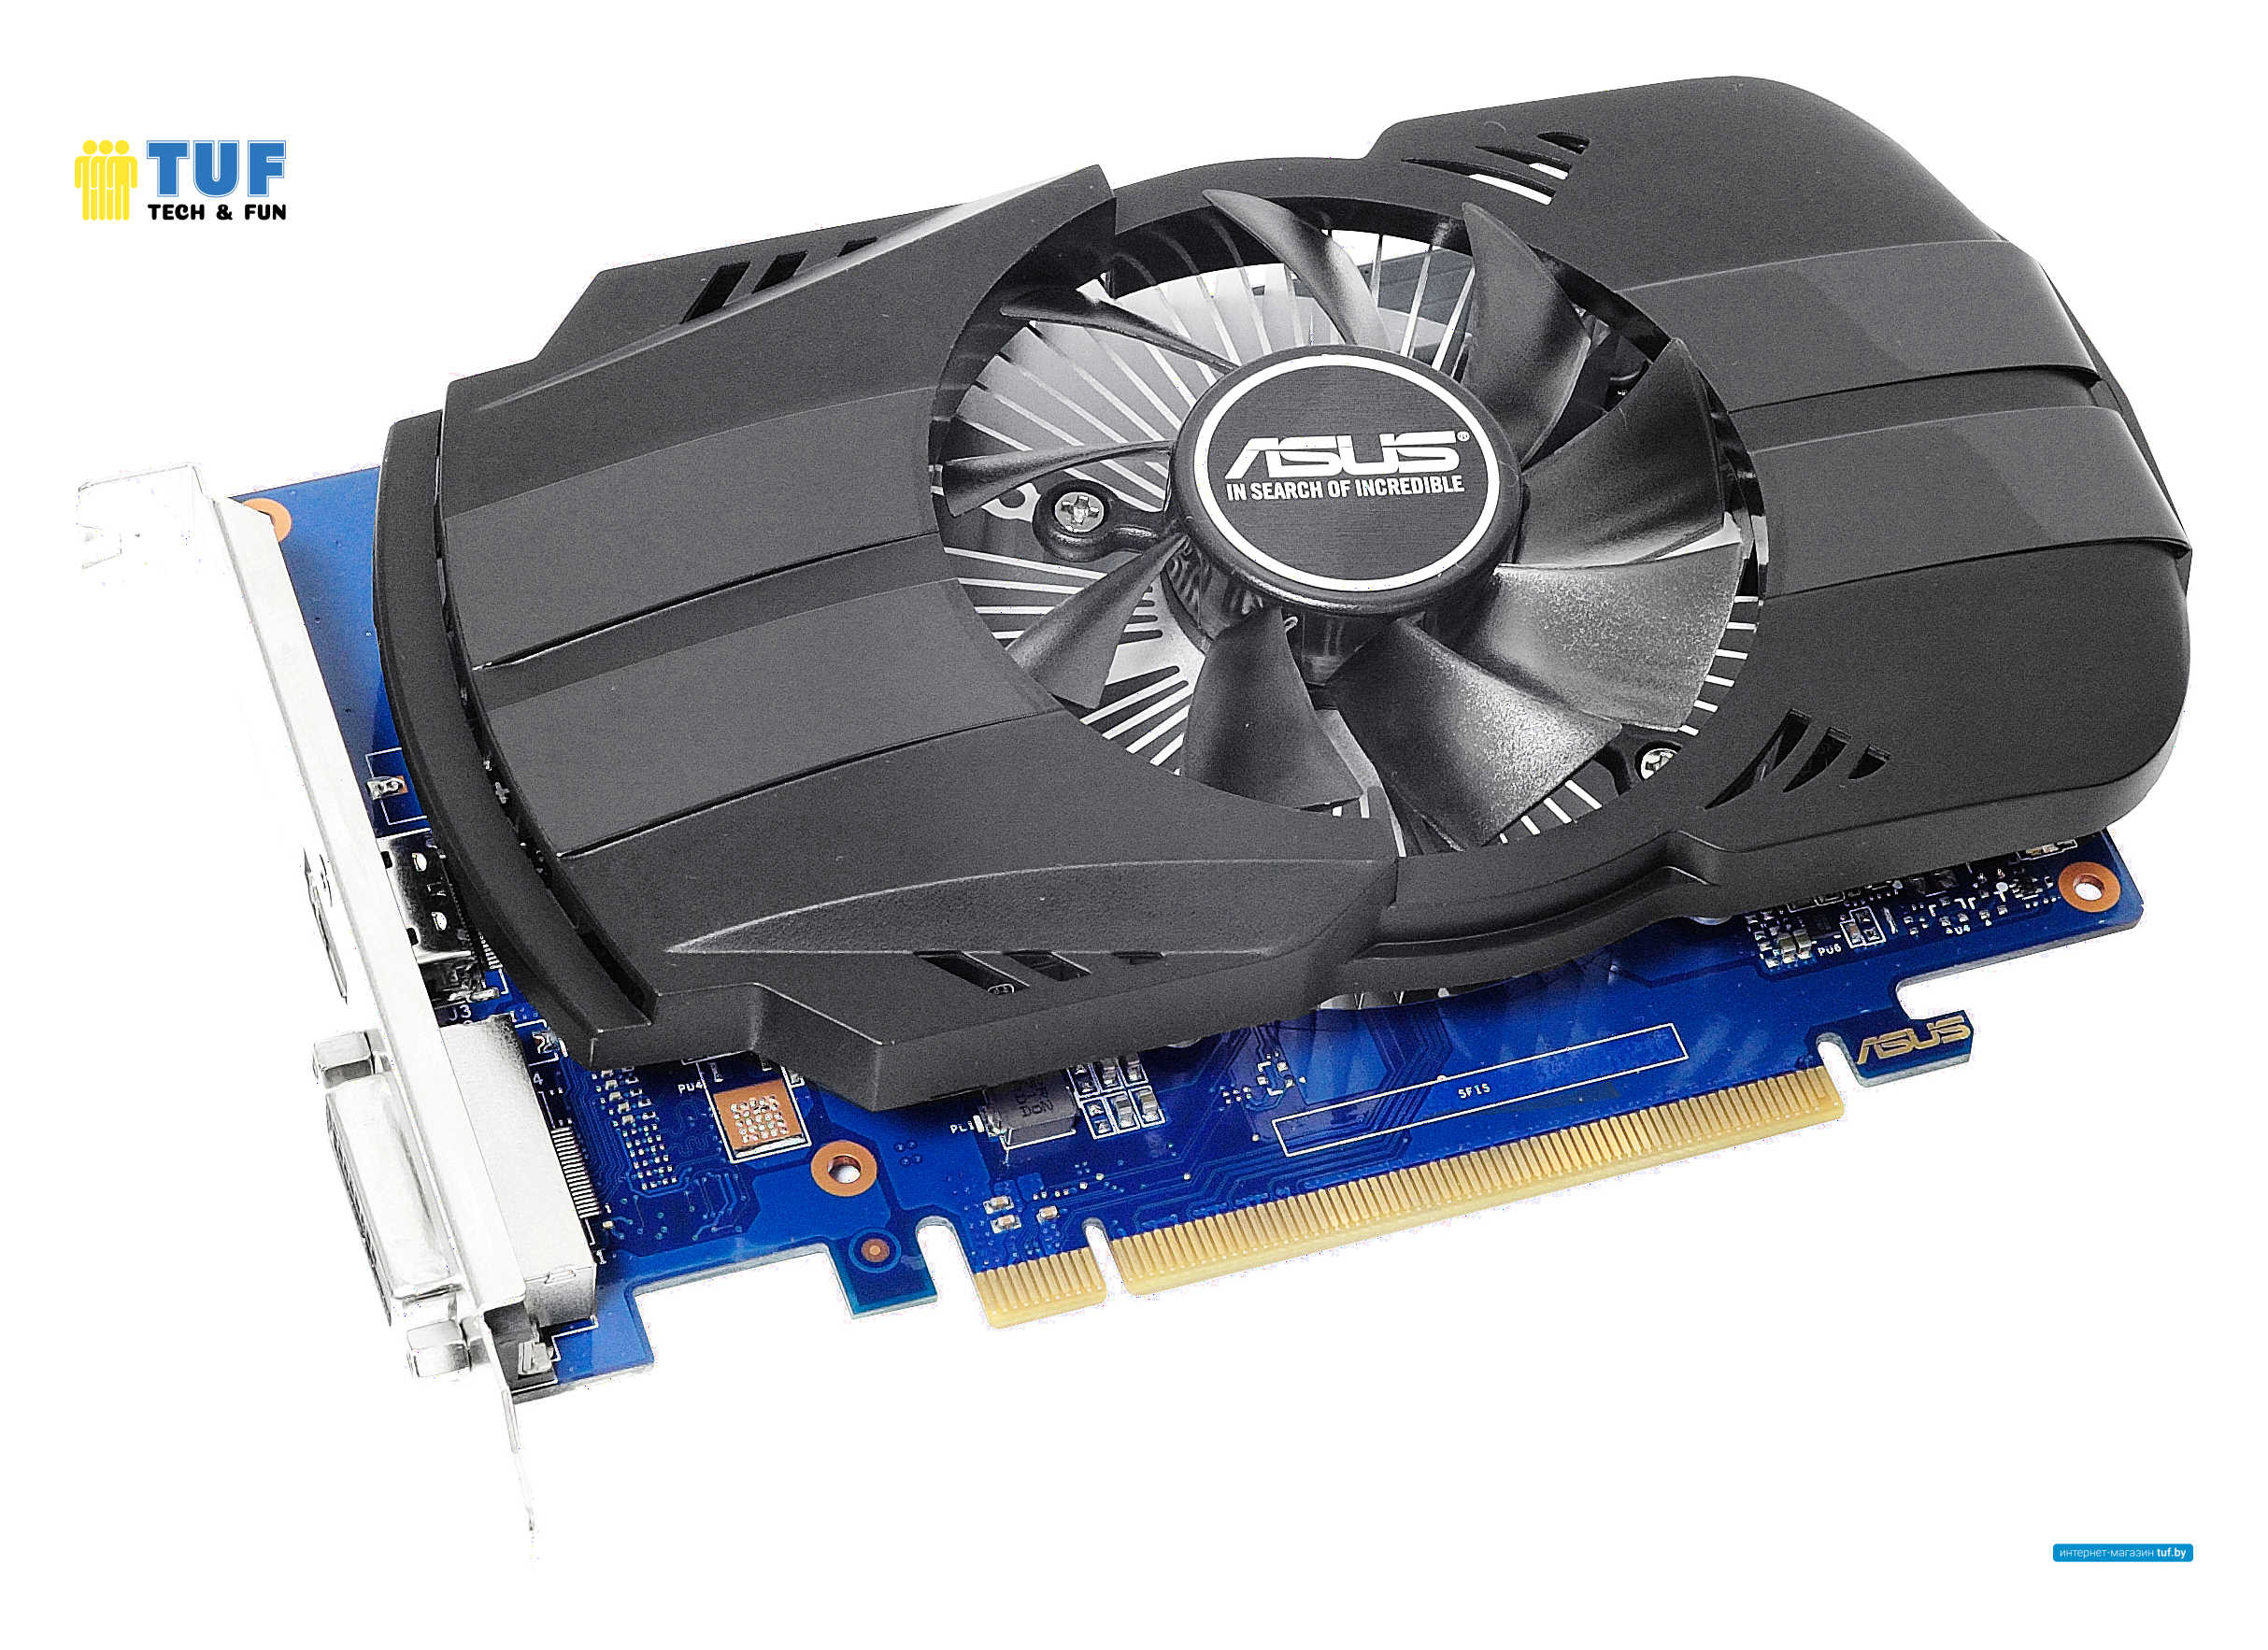 Видеокарта ASUS Phoenix GeForce GT 1030 OC 2GB GDDR5 PH-GT1030-O2G